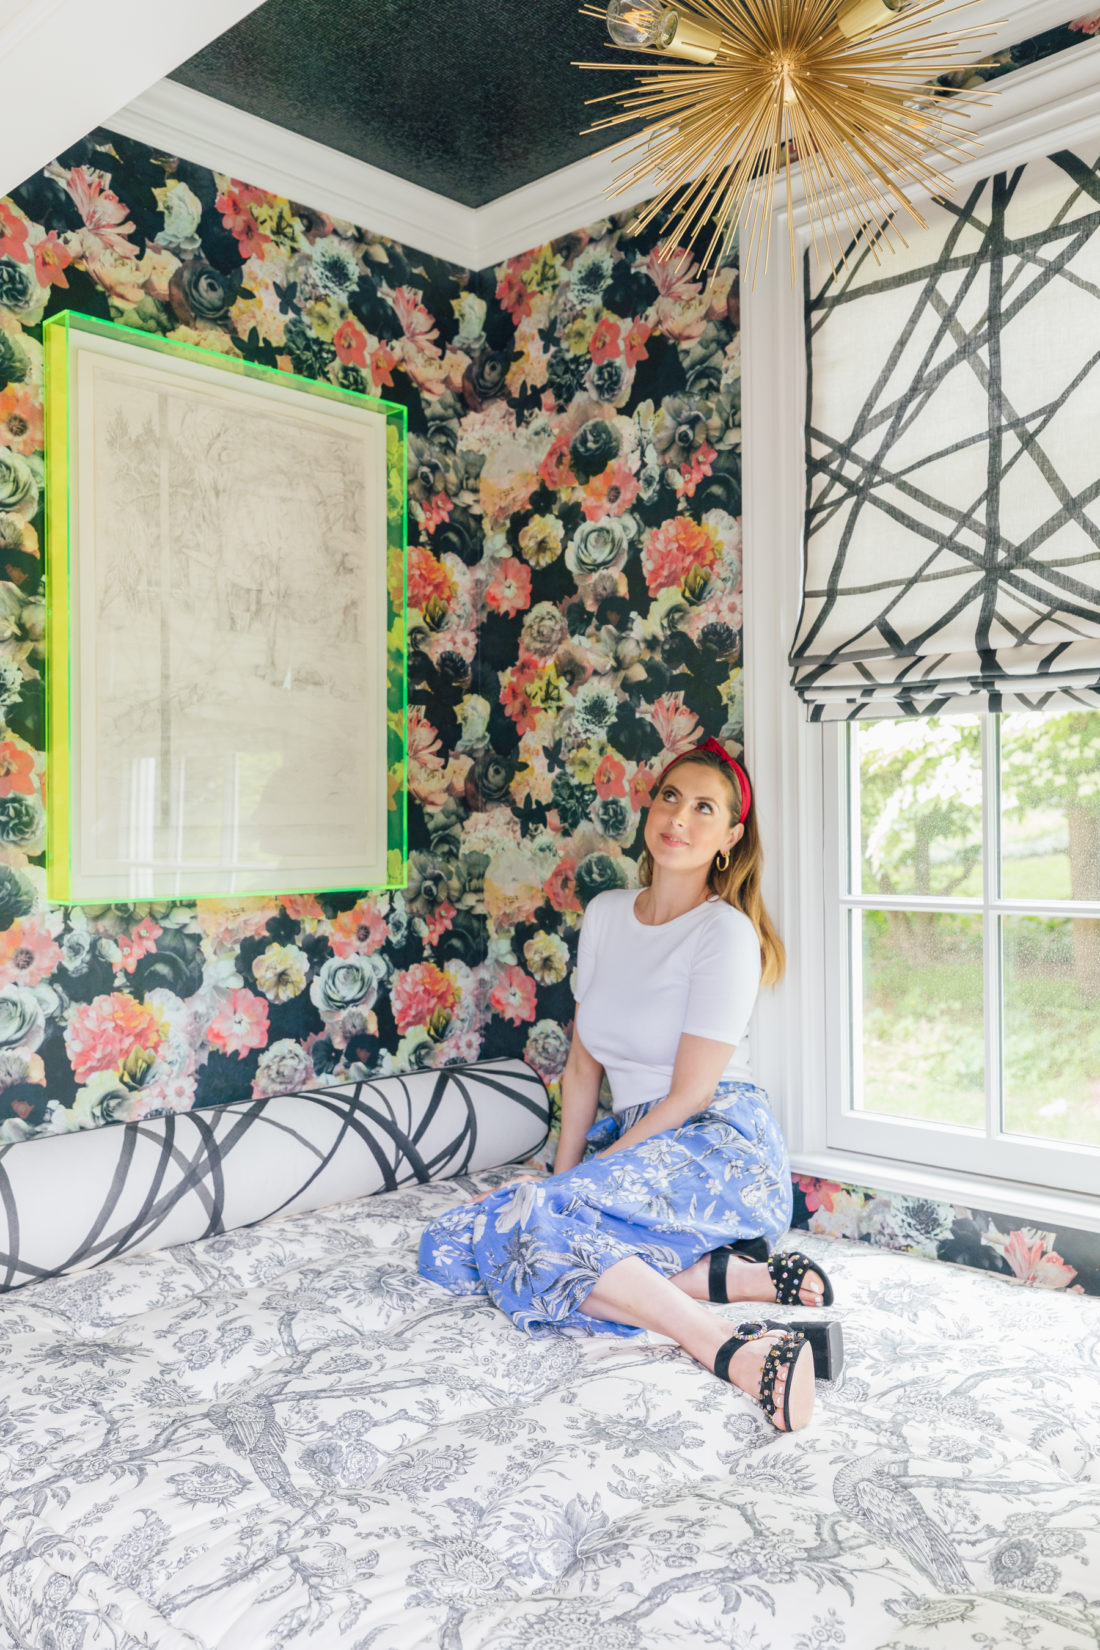 Eva Amurri Martino sits in her colorful snuggle nook in her Connecticut home